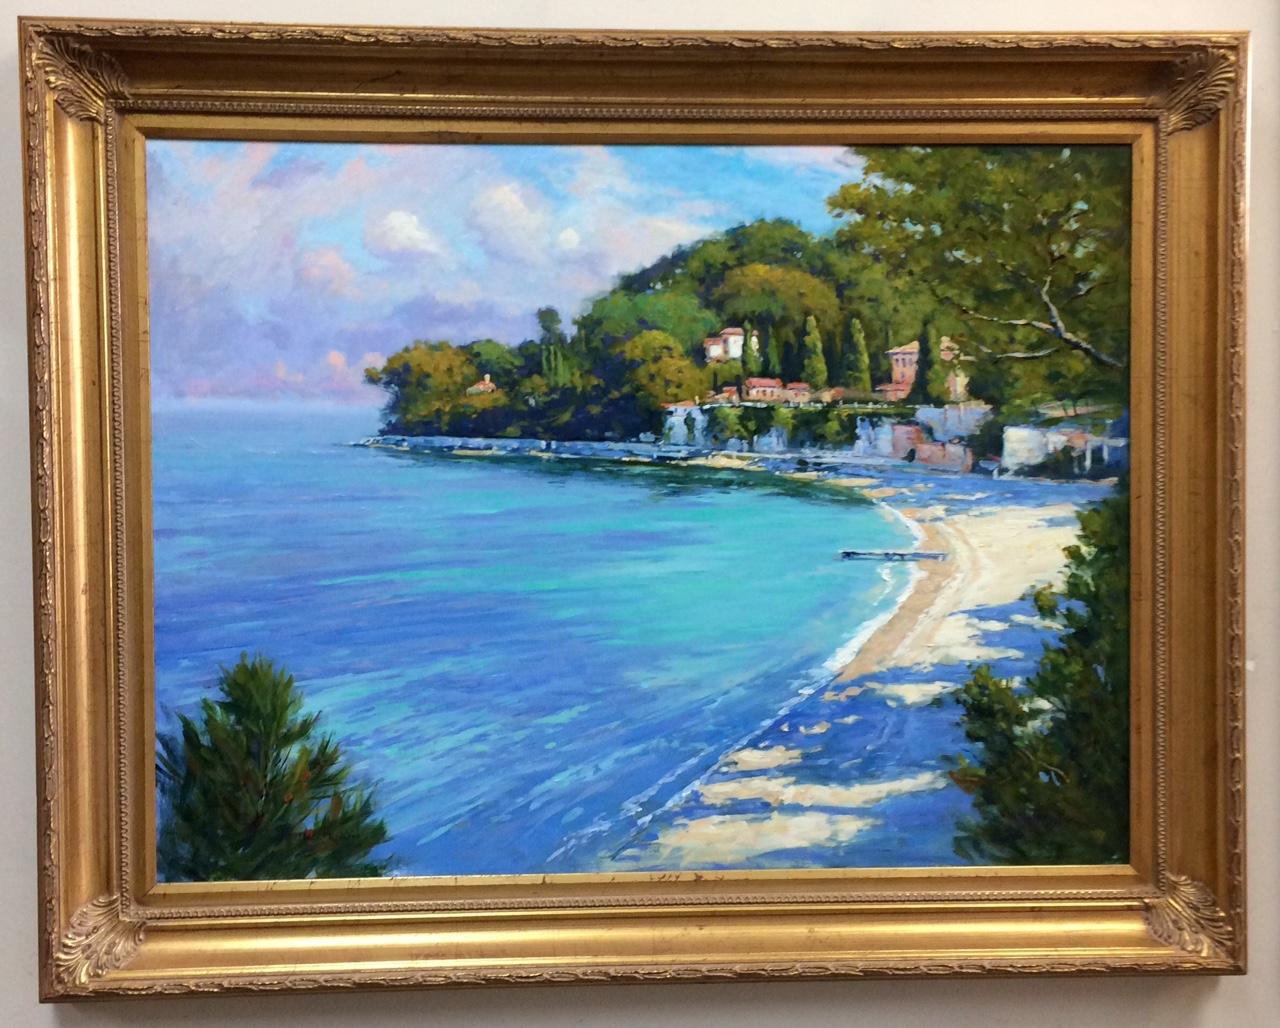 Jim Rodgers Landscape Painting - Summer in Cap Ferrat, original 30x40 French impressionist marine landscape